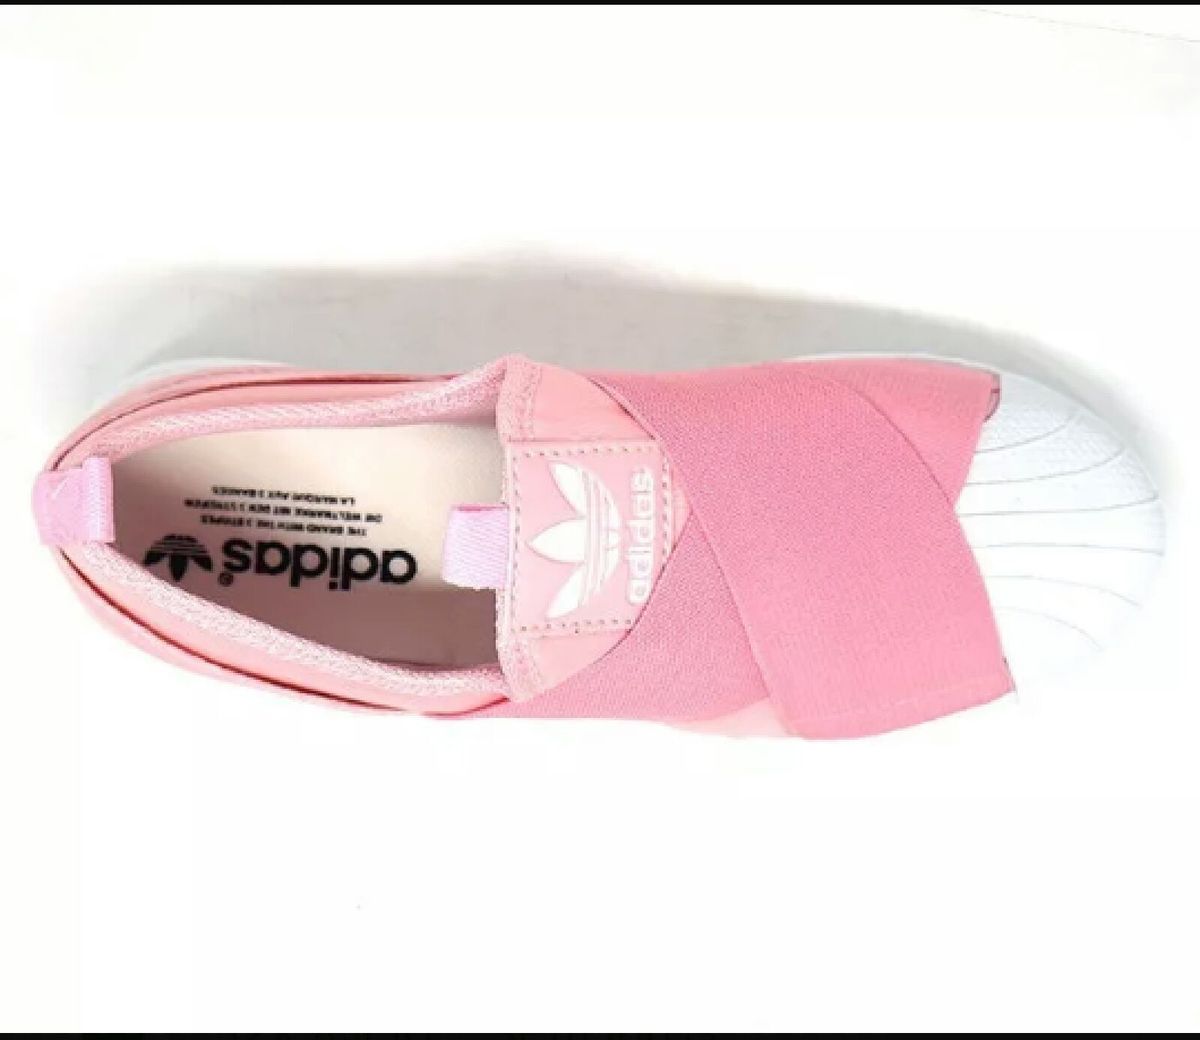 tênis adidas slip on elástico rosa